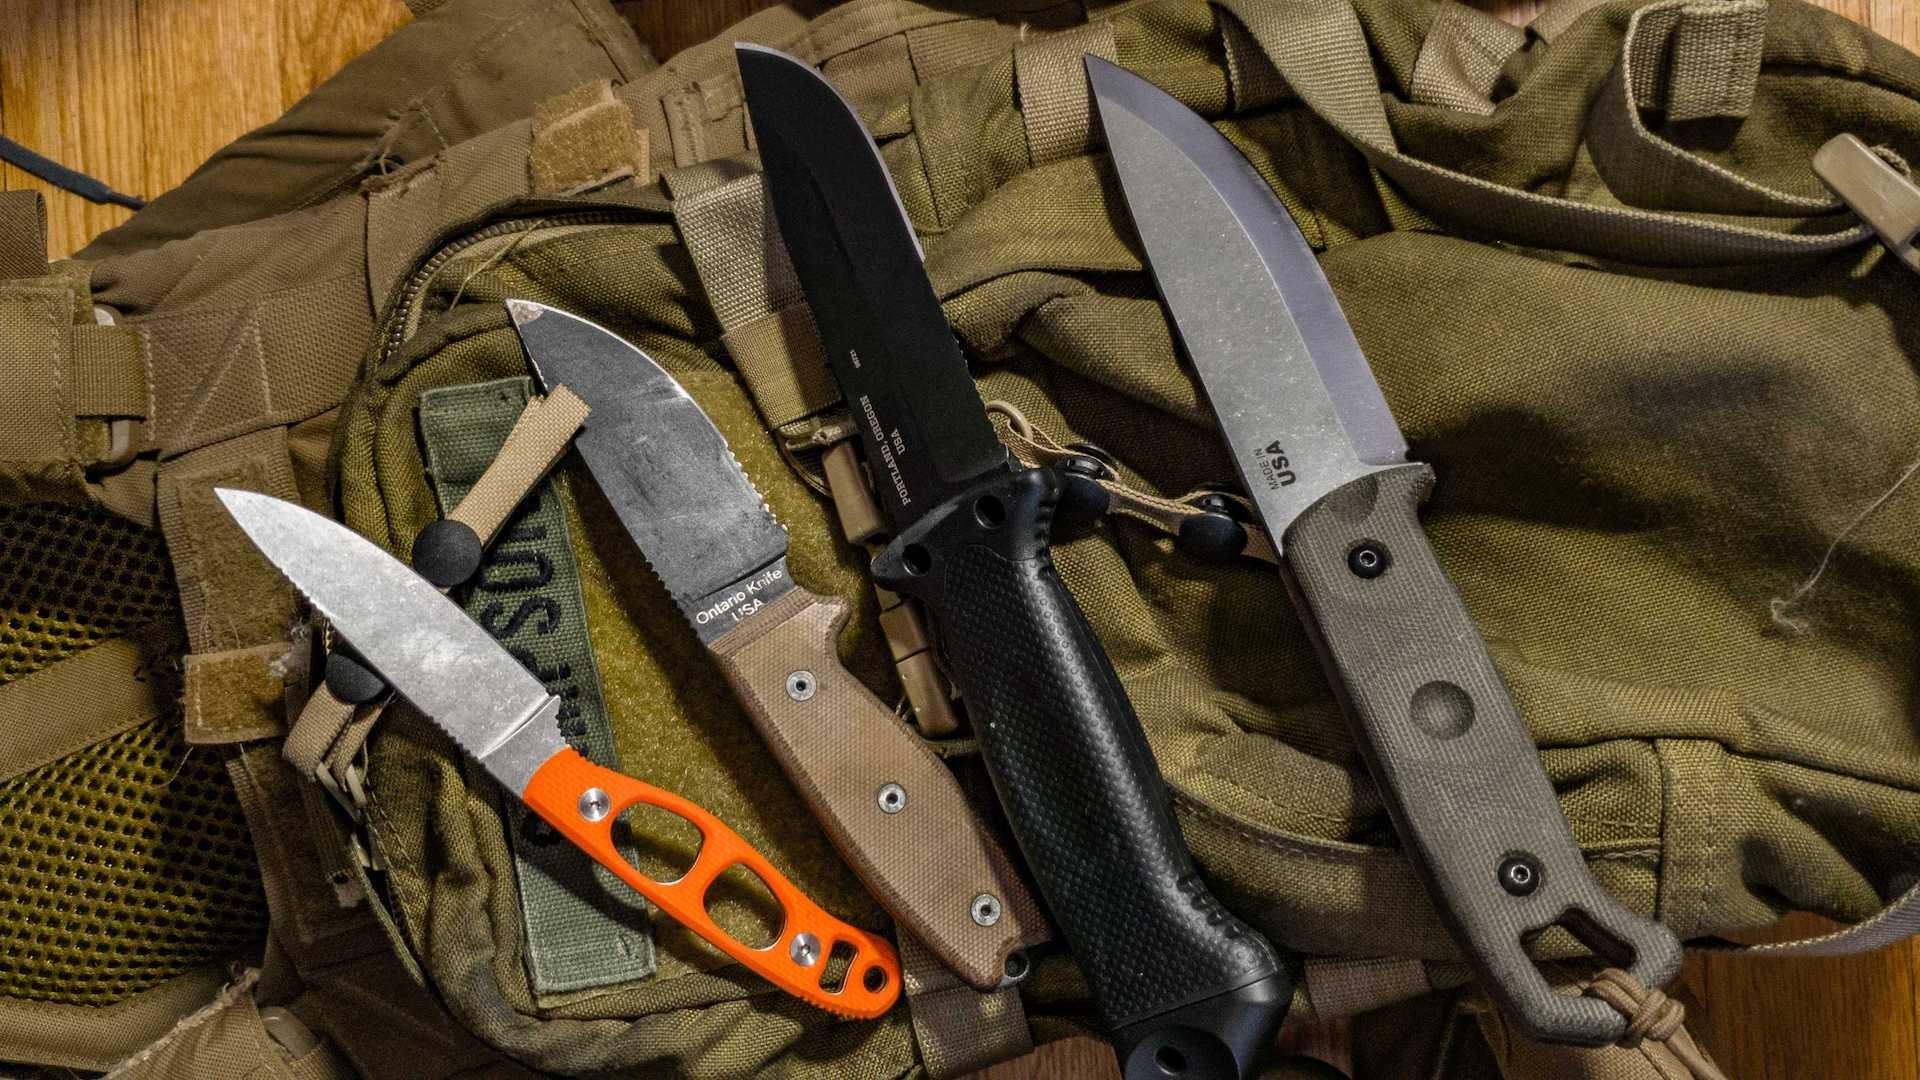 https://taskandpurpose.com/uploads/2021/02/22/best-survival-knives.jpg?auto=webp